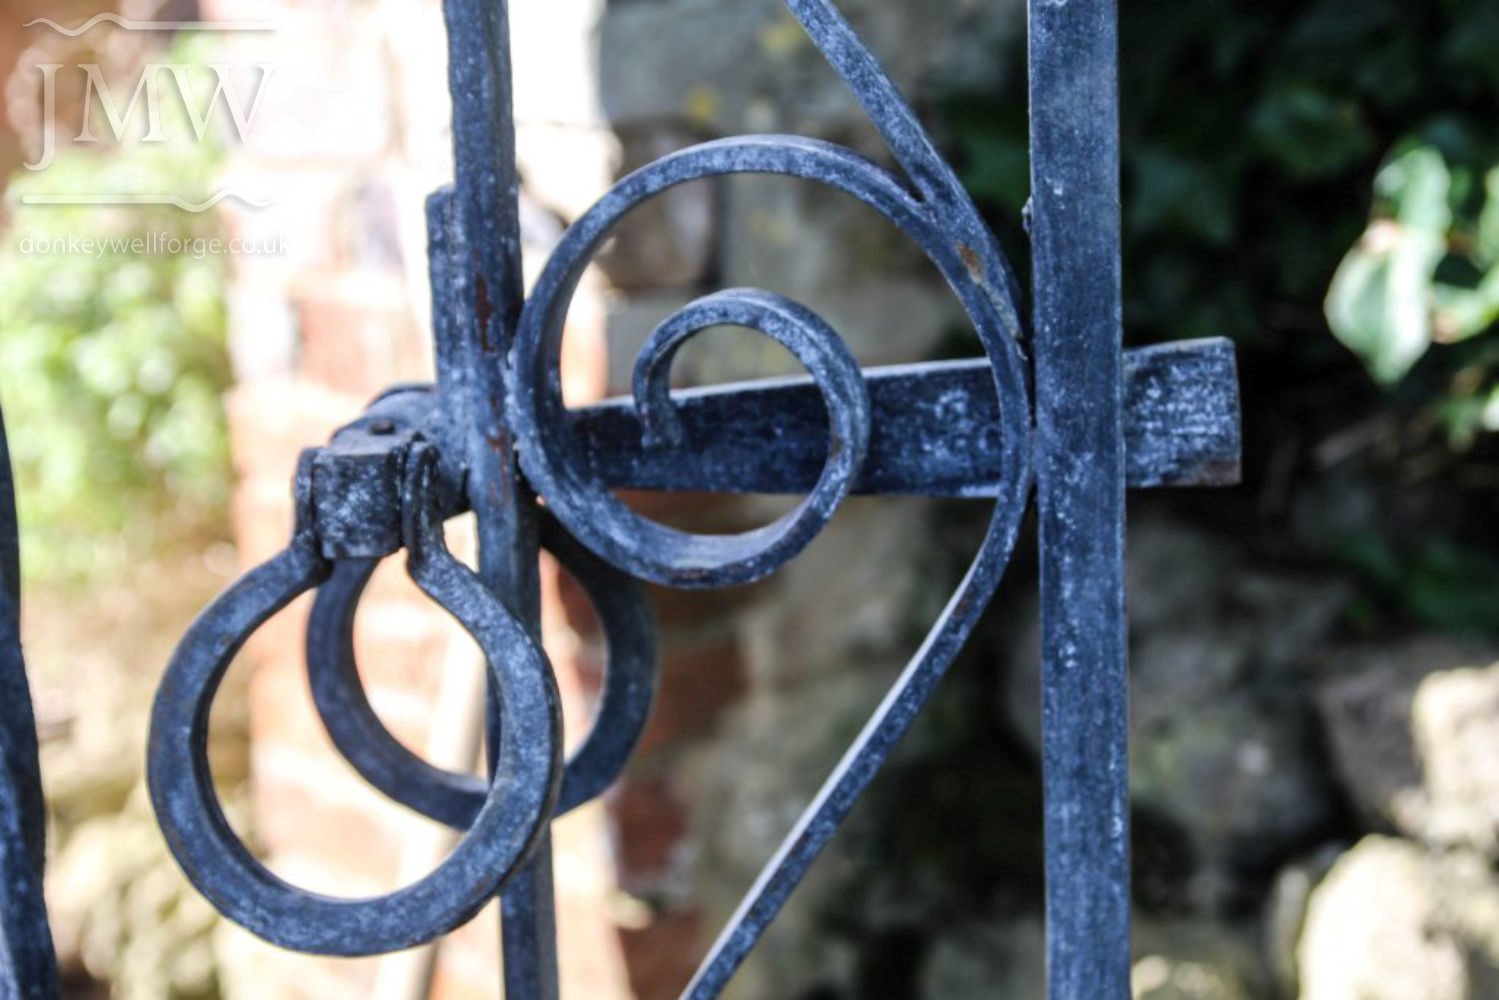 bespokes-arch-gate-garden-iron-ornamental-decorative-blacksmith-latch-donkeywell-forge